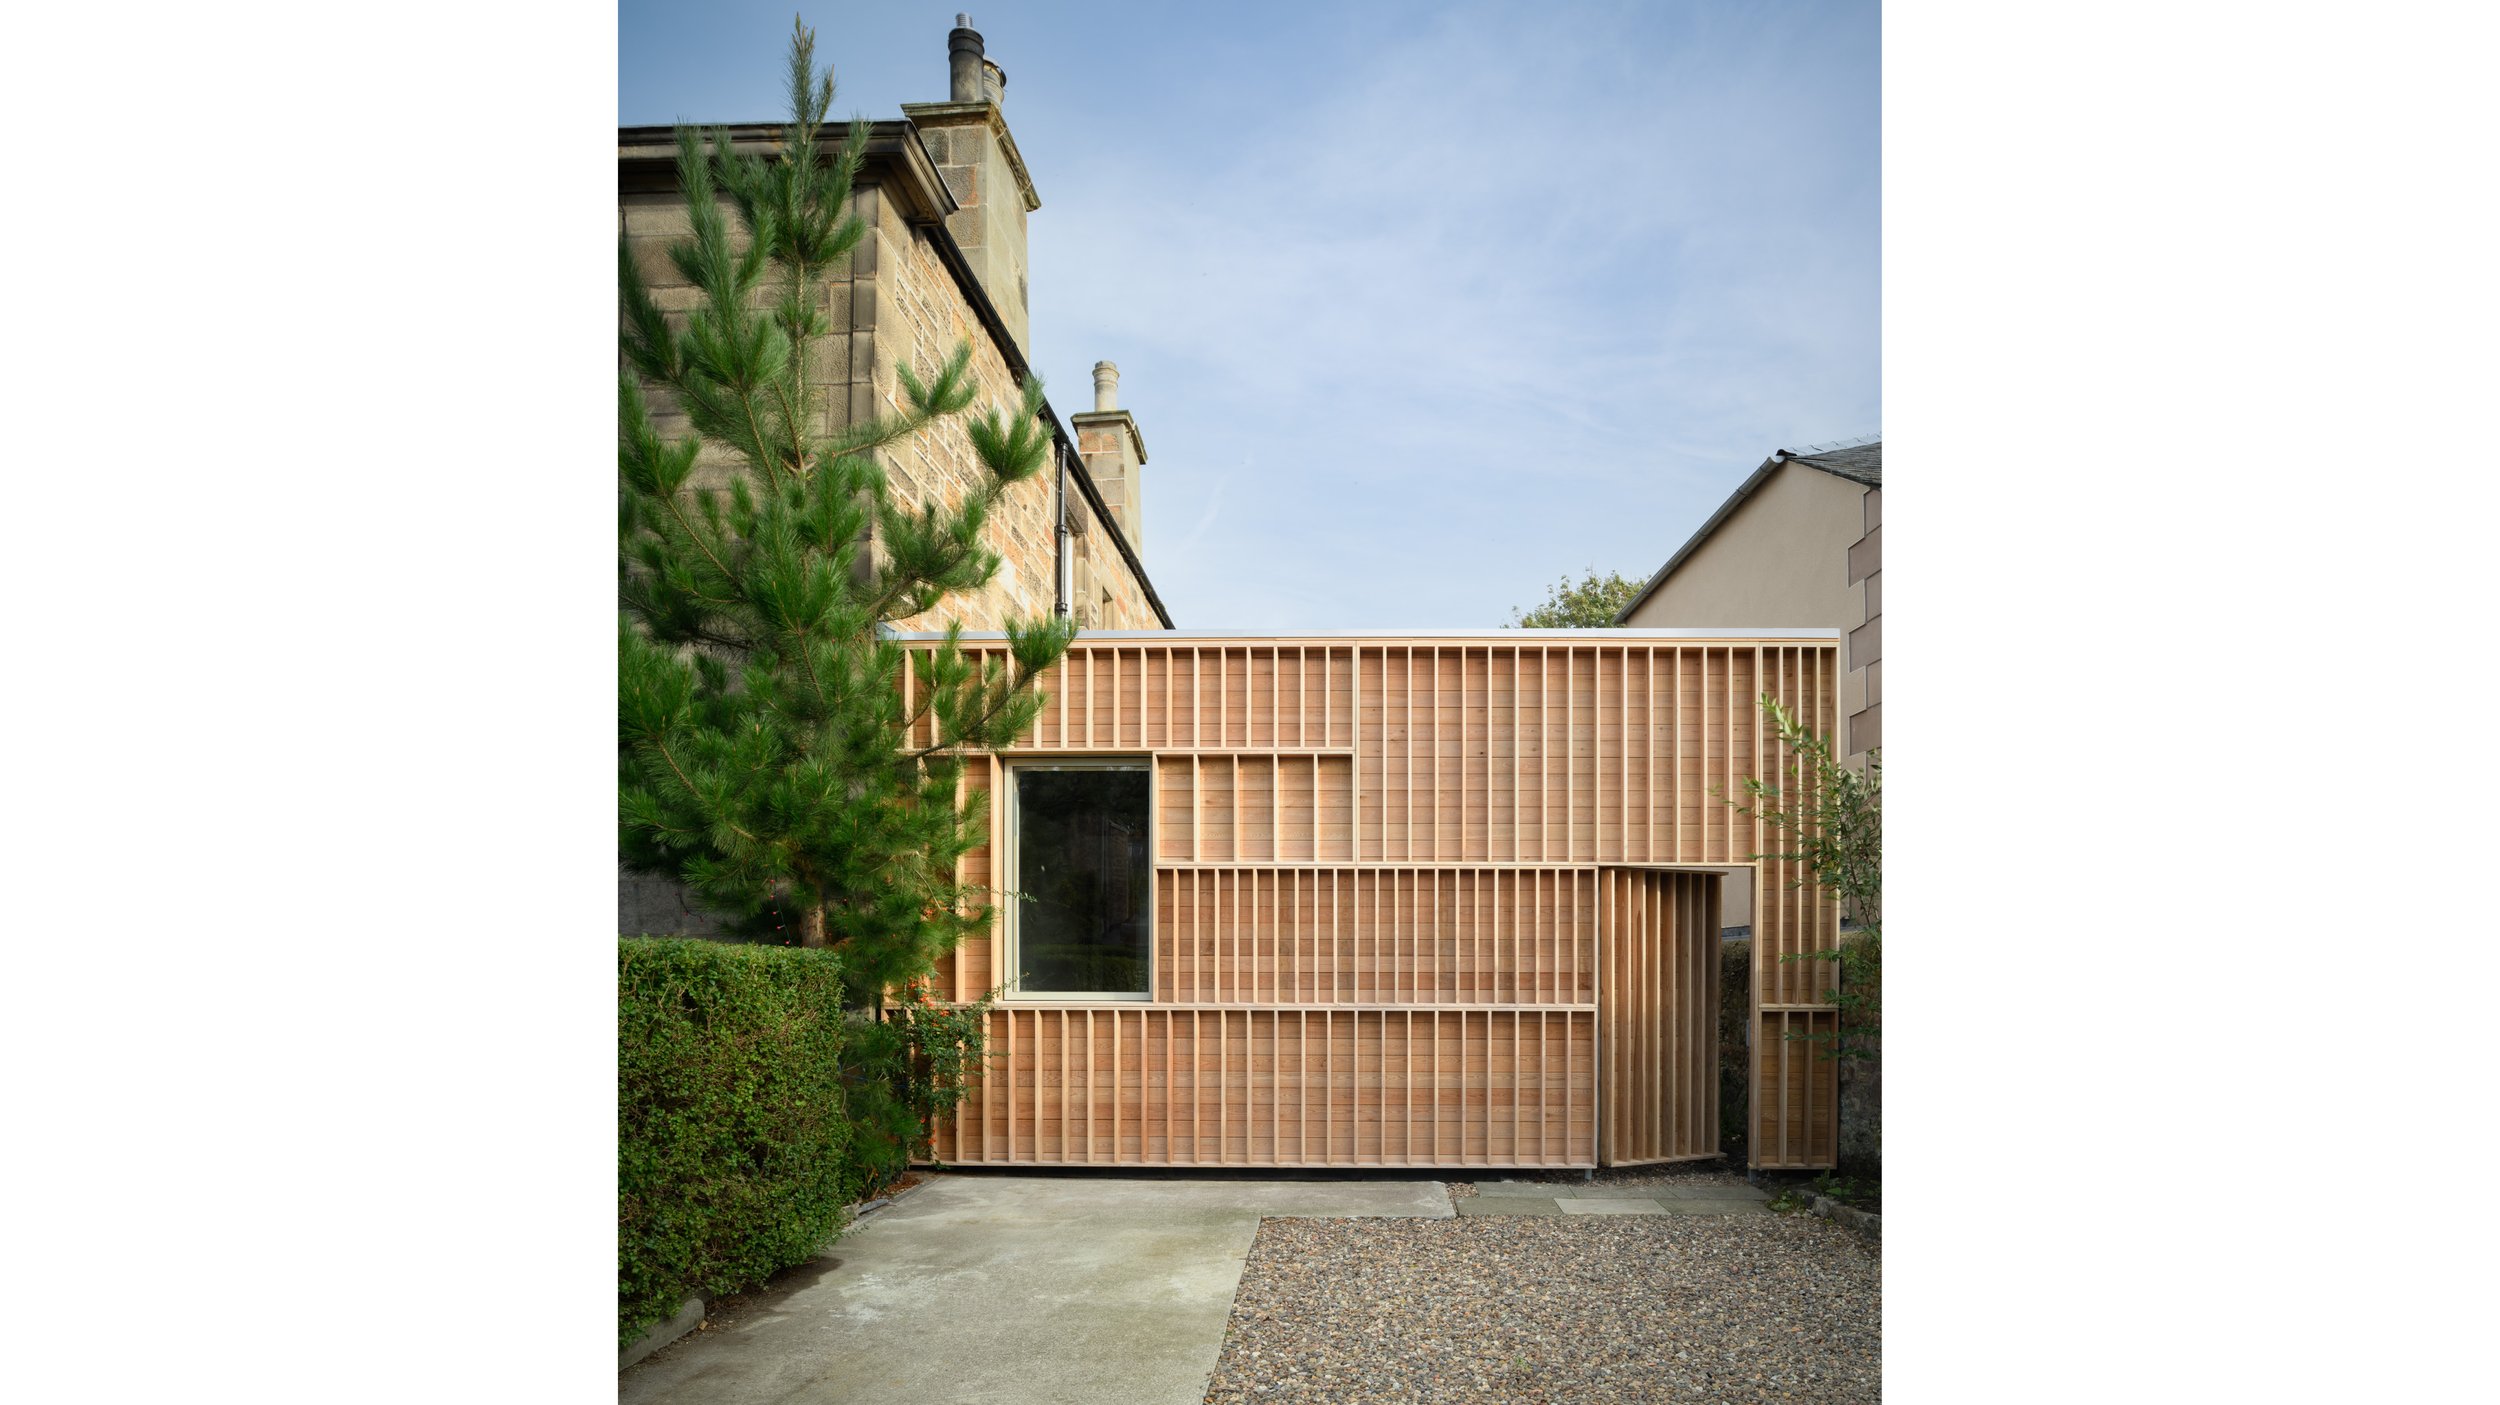 eaa-edinburgh-architectural-association-scotland-uk-awards-2022-winners-small-project-4.jpg